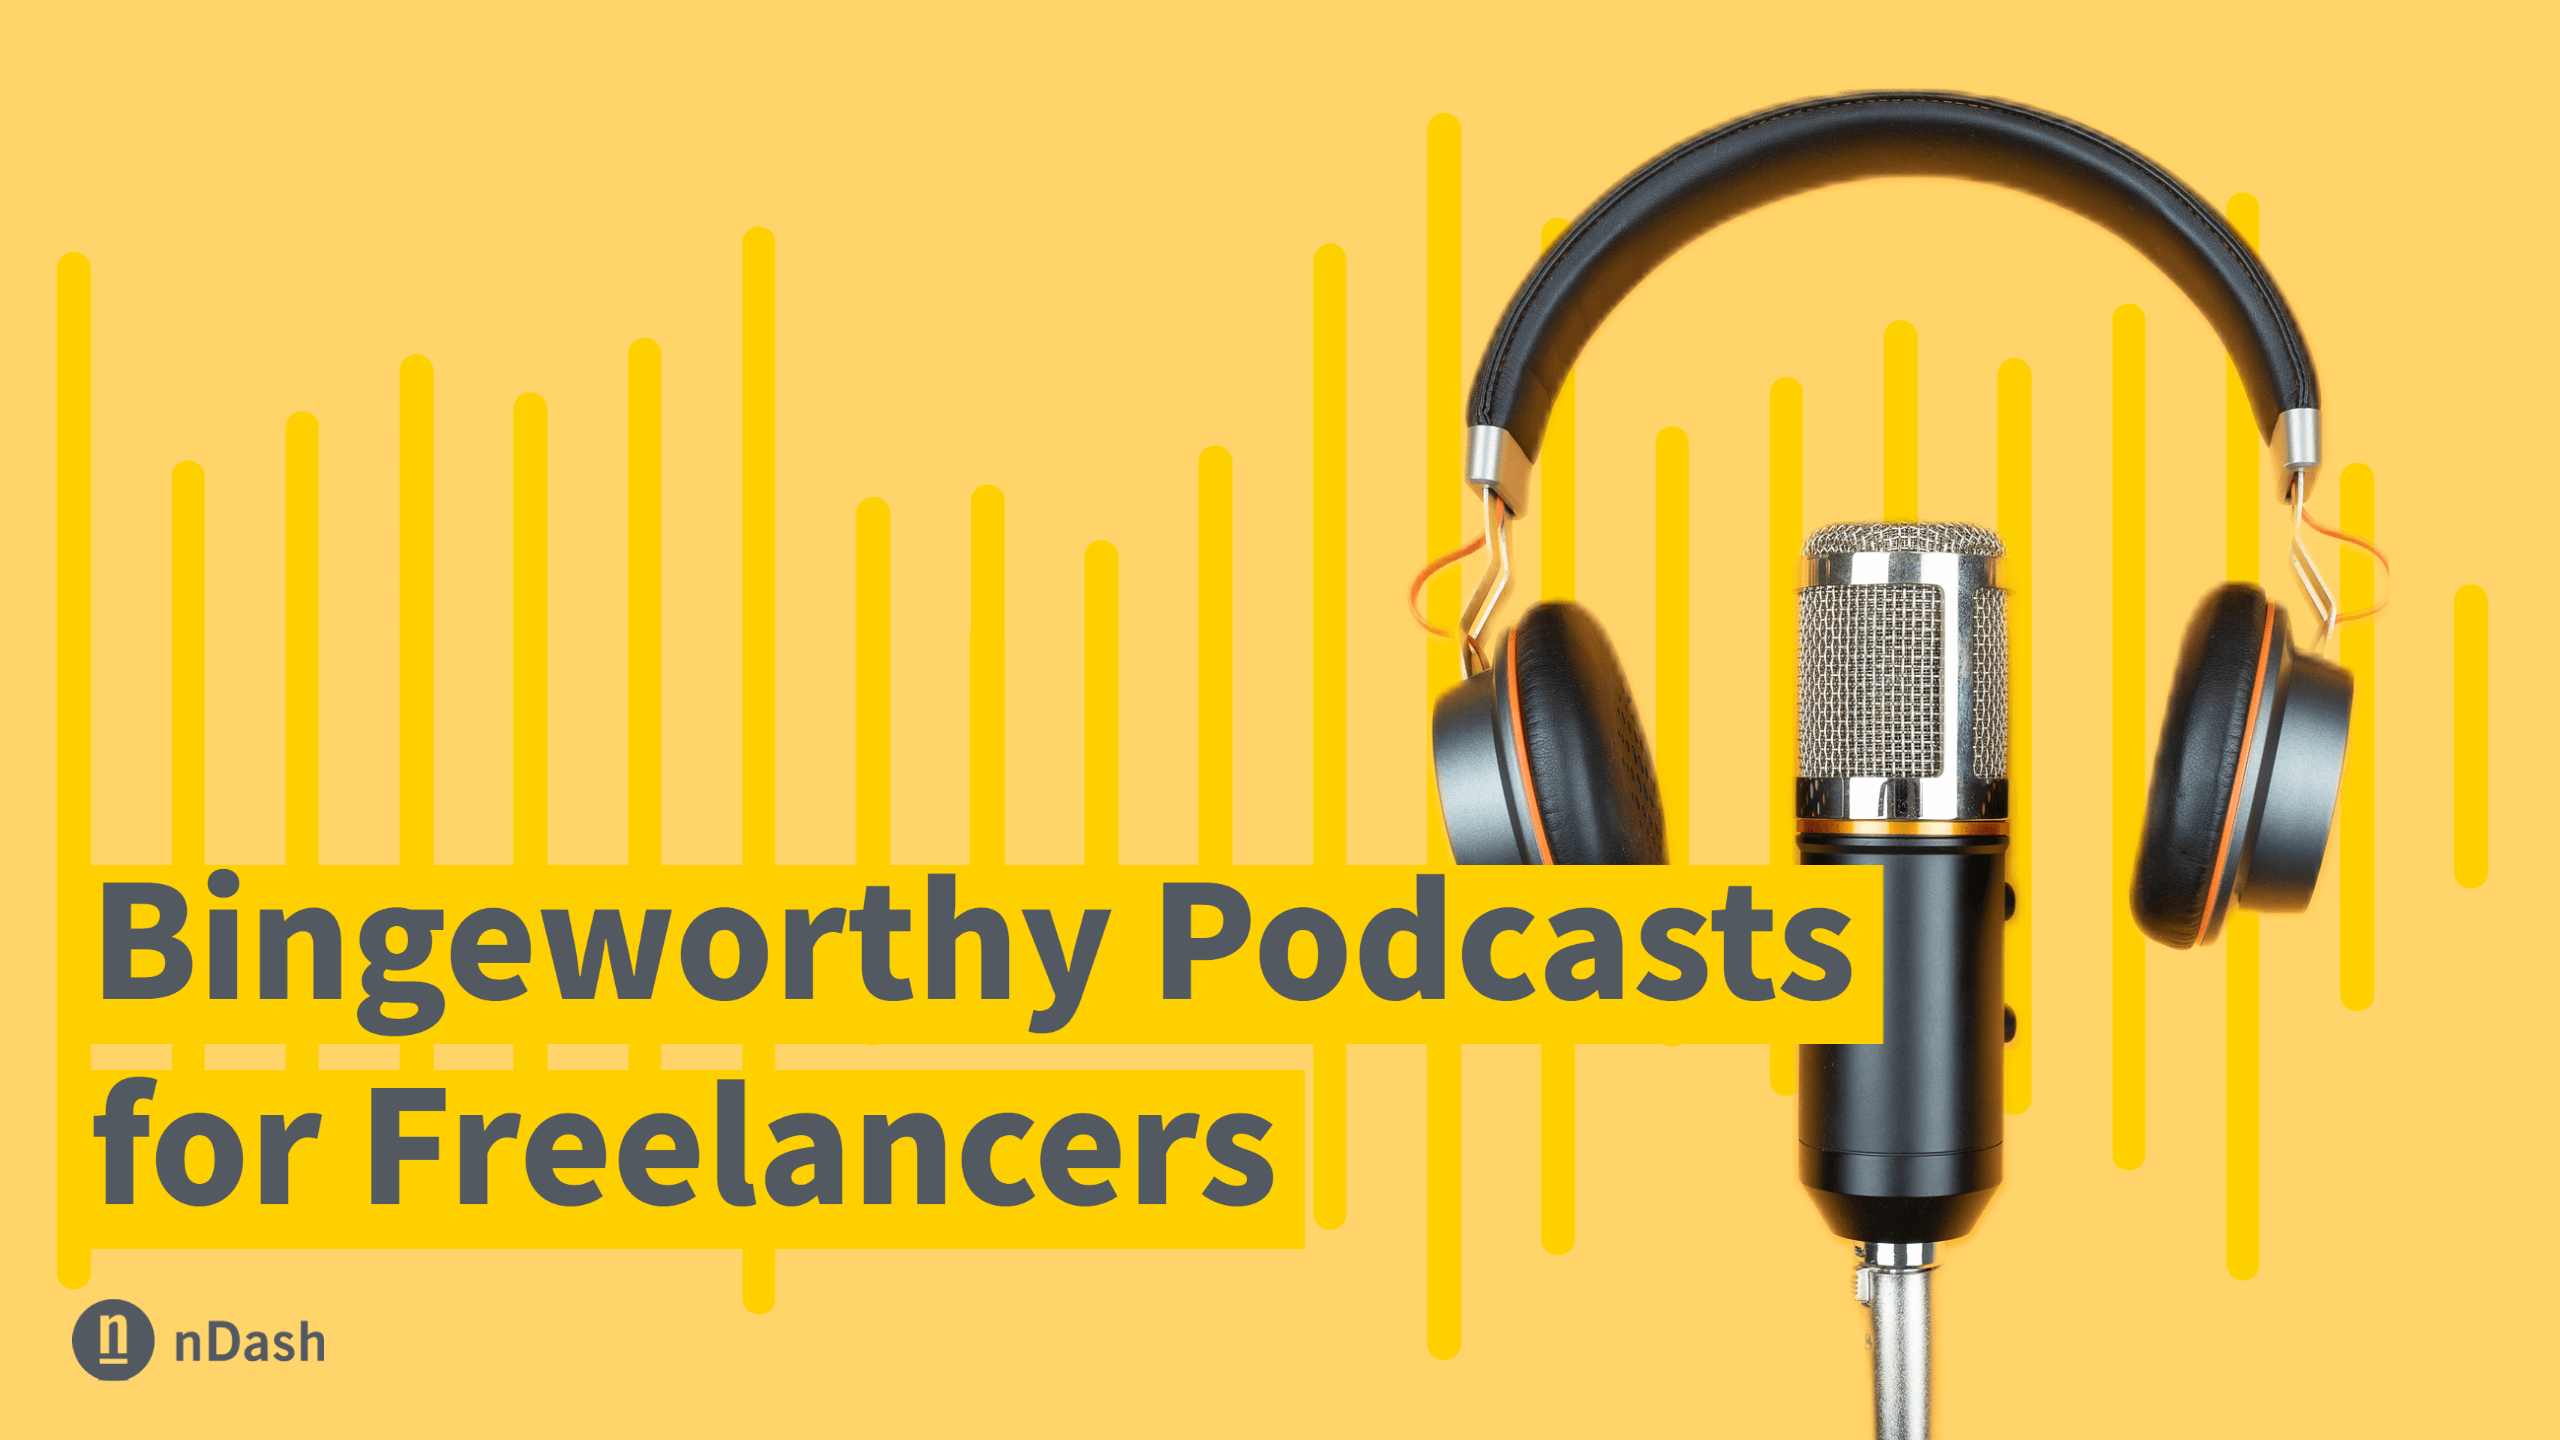 Bingeworthy Podcasts for Freelancers